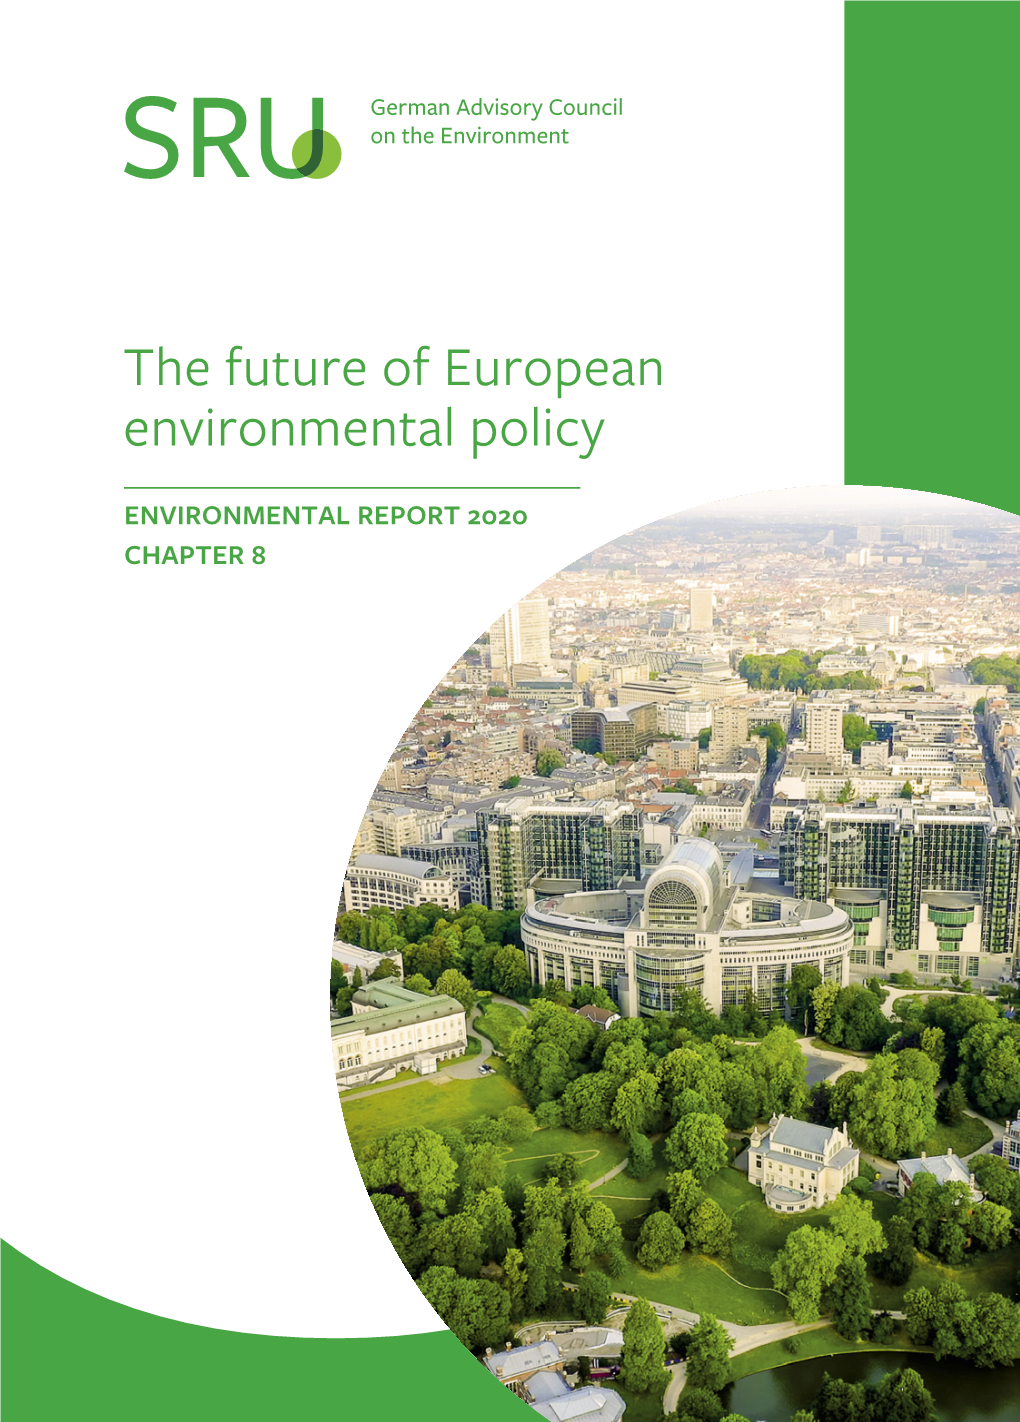 The Future of European Environmental Policy